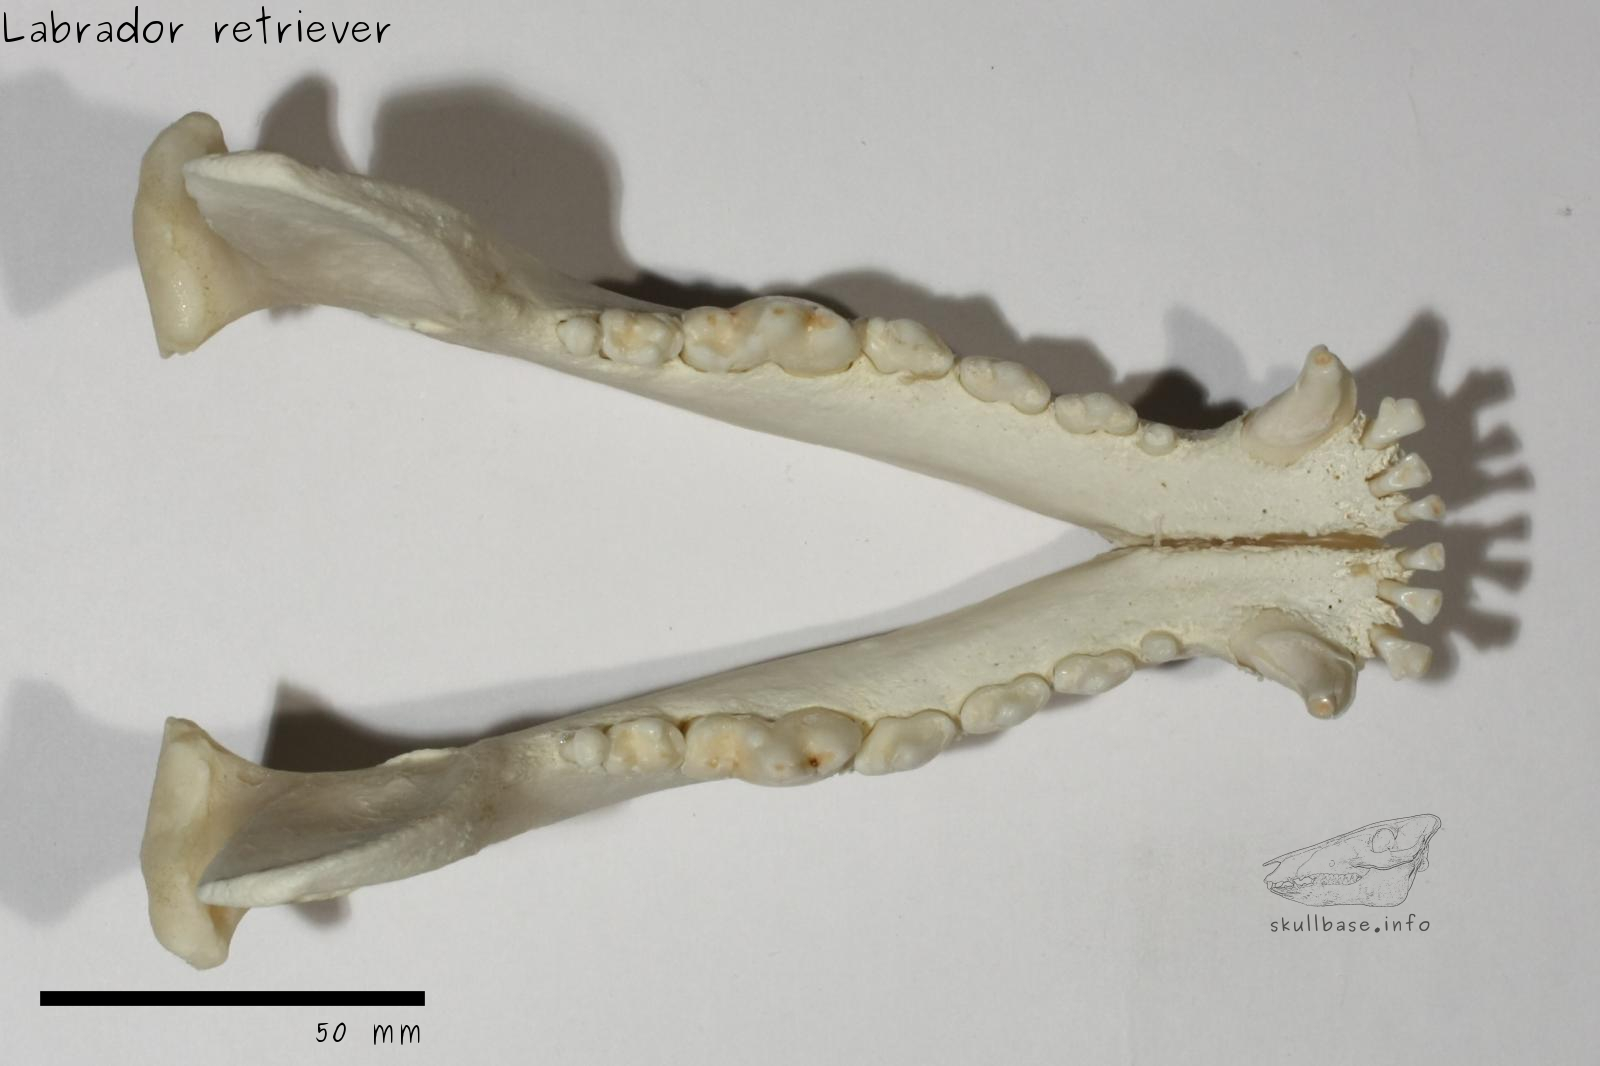 Labrador retriever (Canis lupus familiaris) jaw